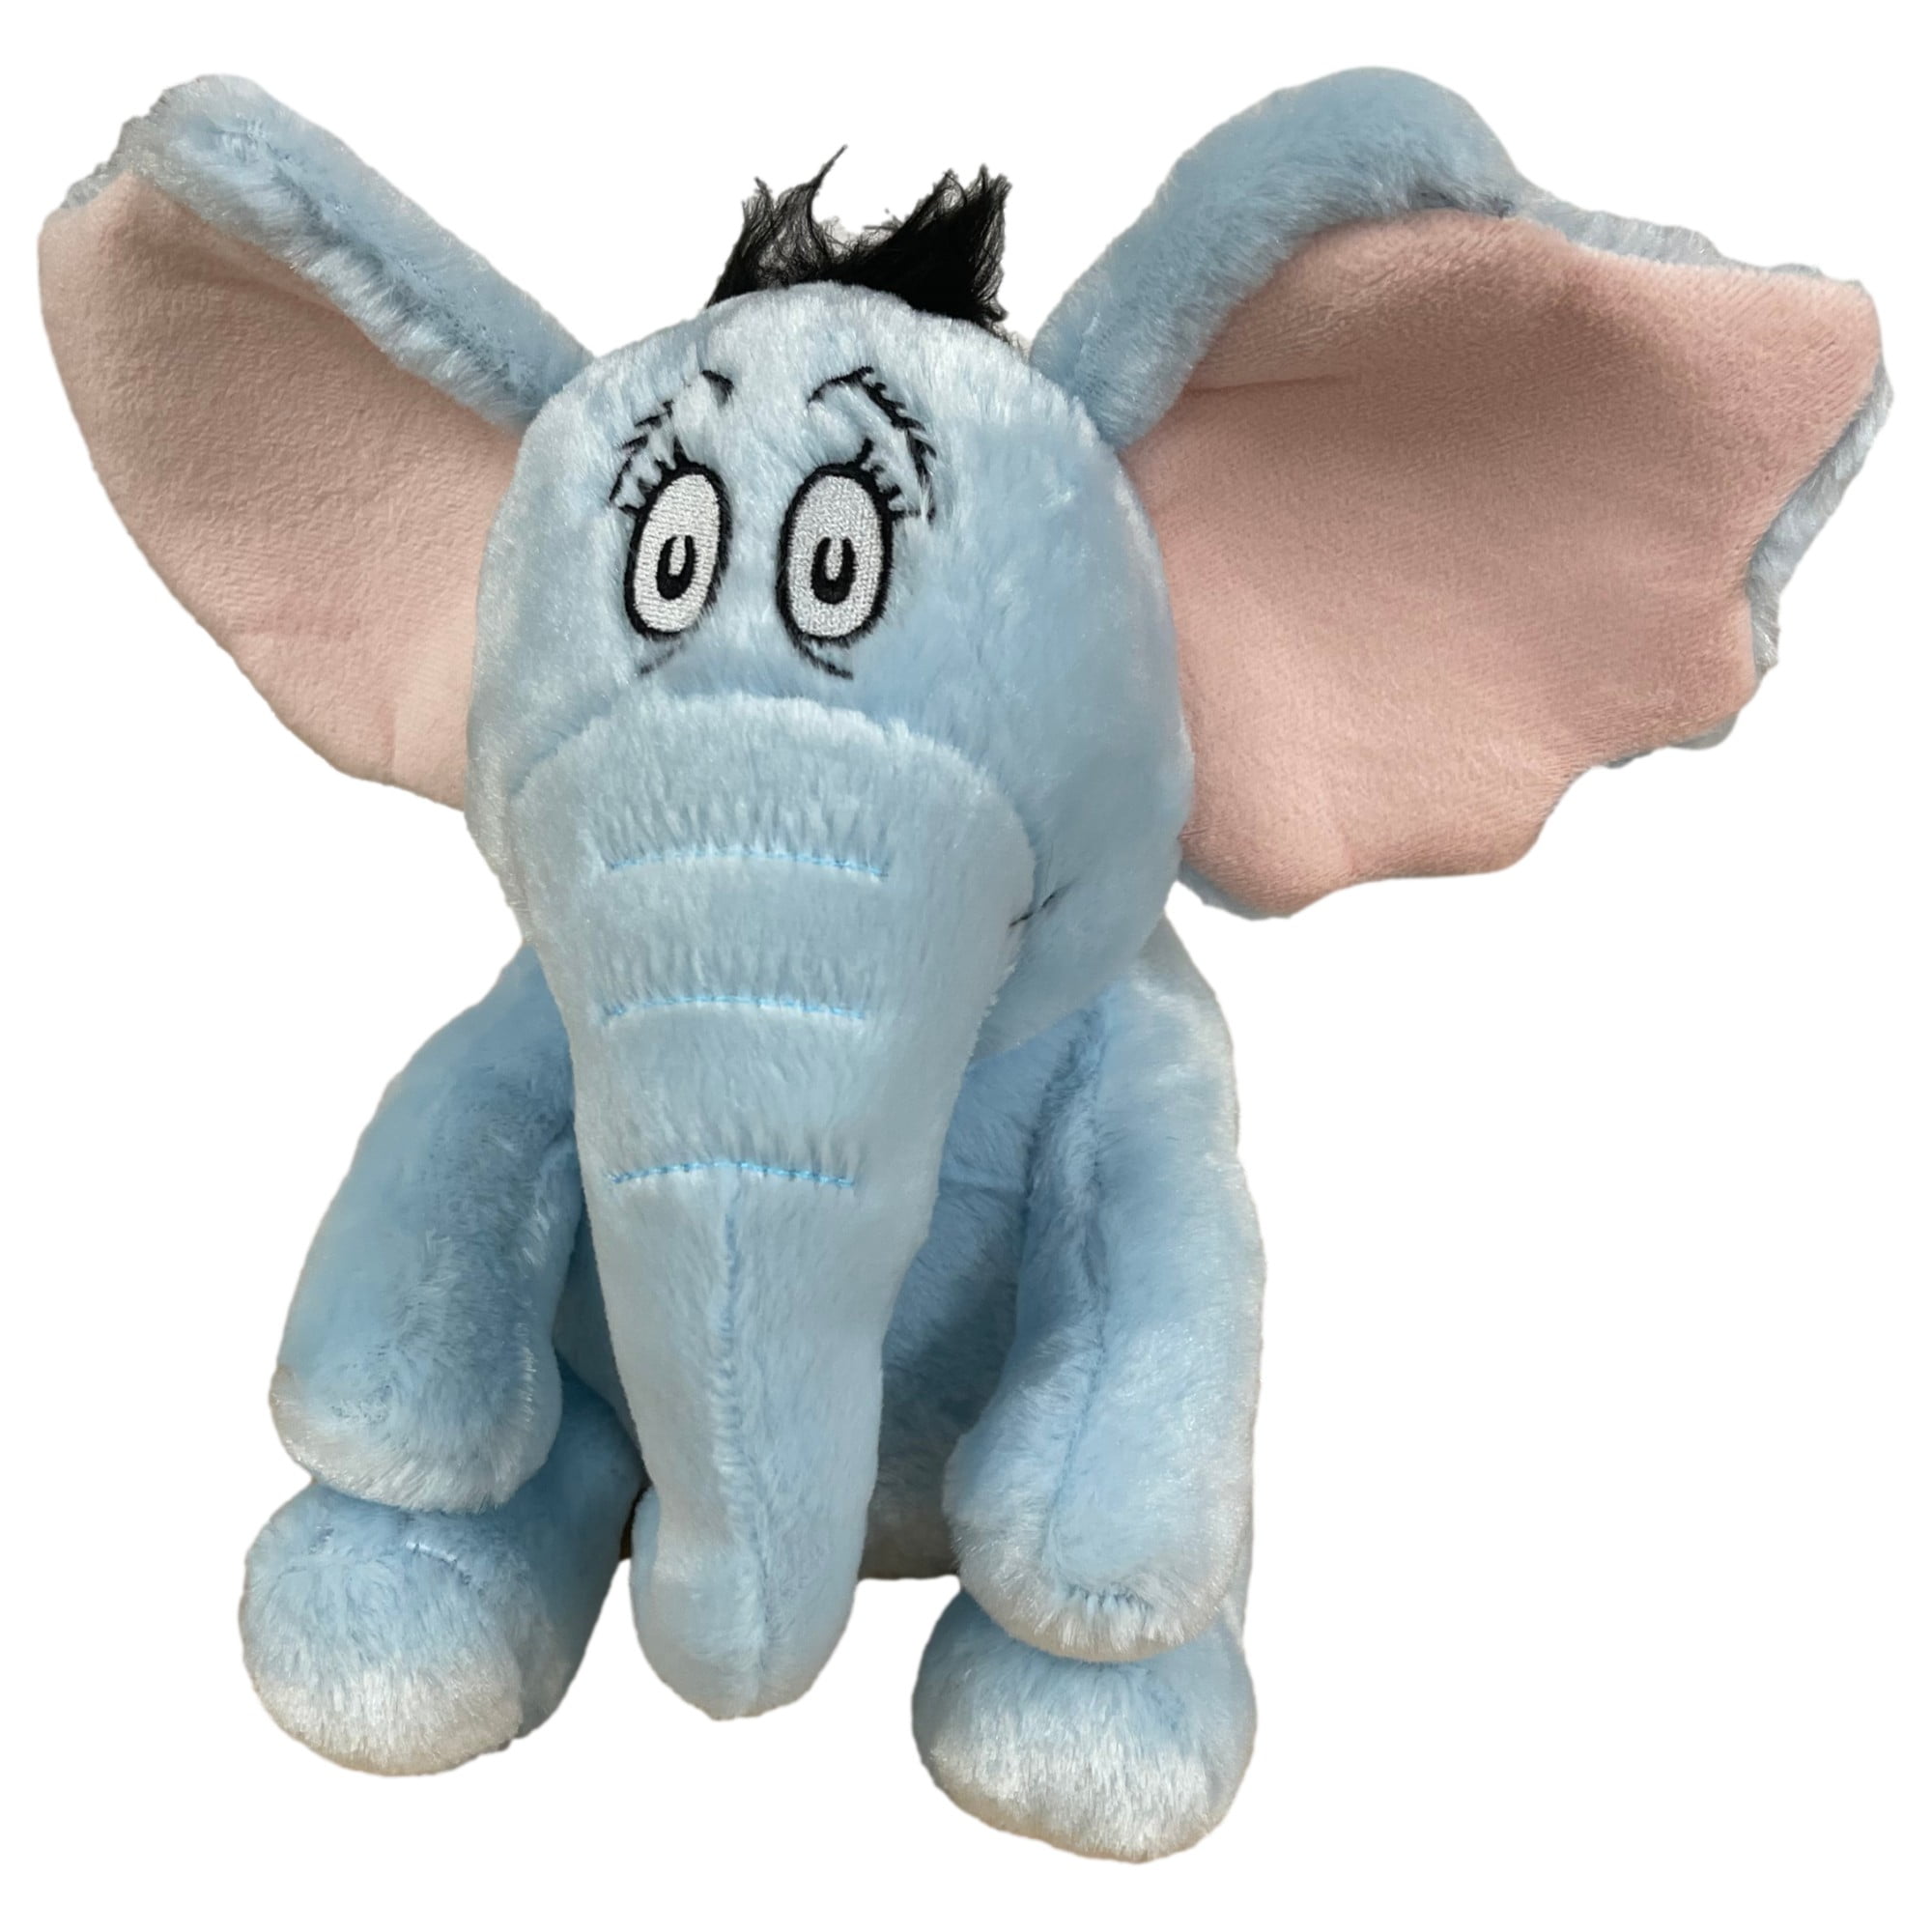 Details about   Dr Seuss HORTON HEARS A WHO Kohl's Cares Blue Elephant Plush Stuffed Toy 